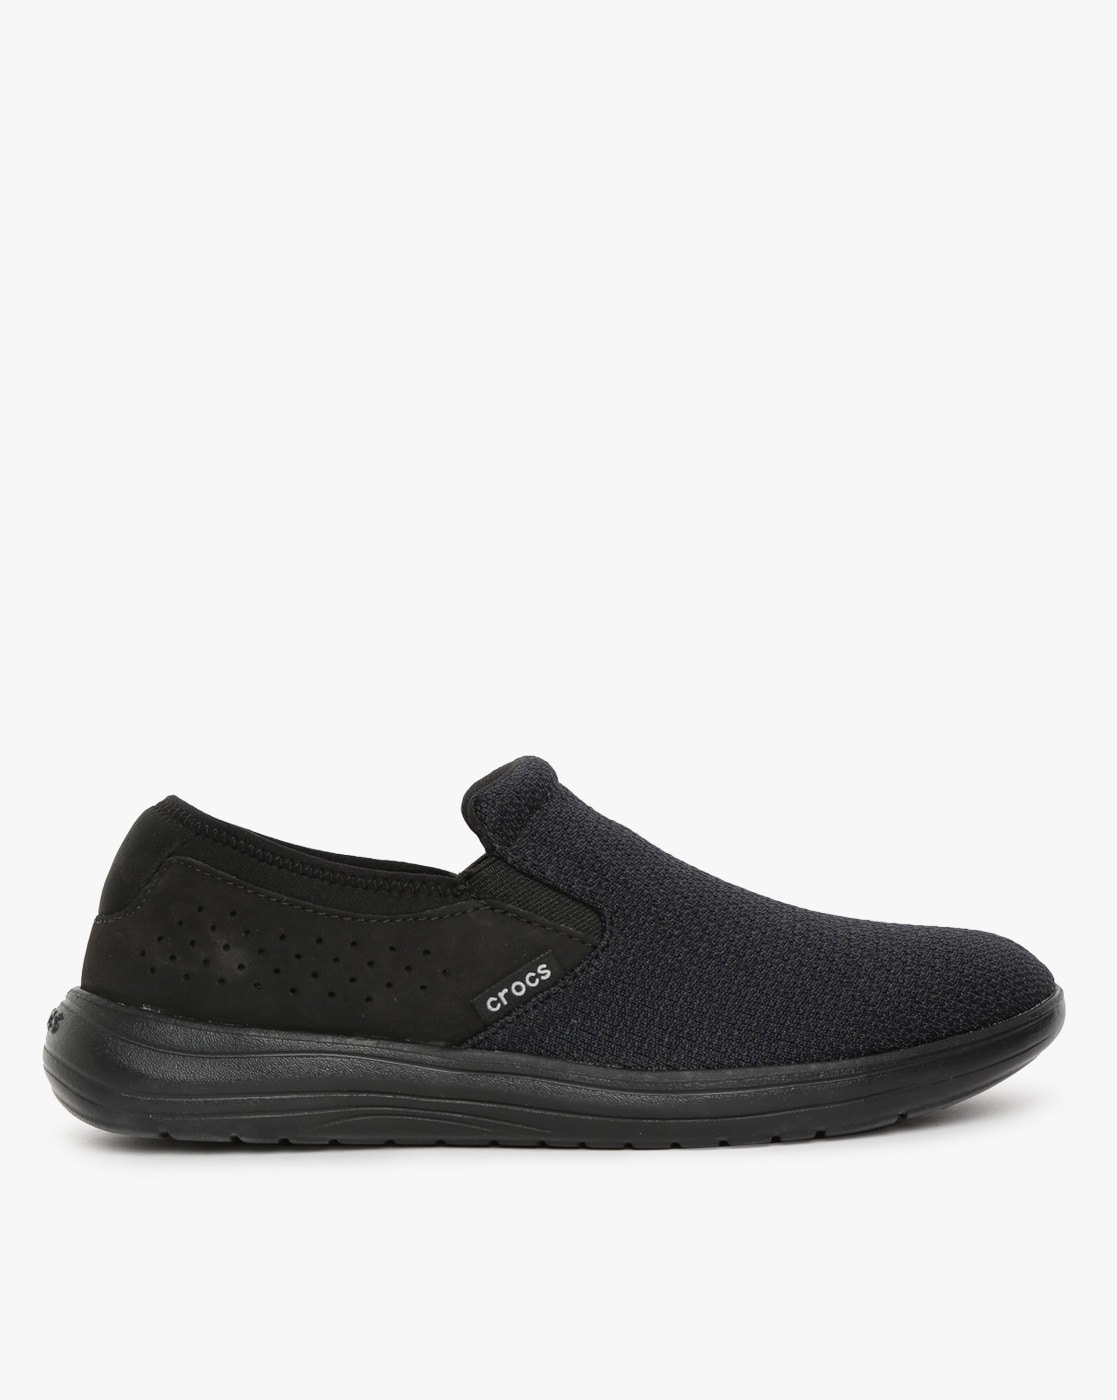 crocs slip on casual shoes